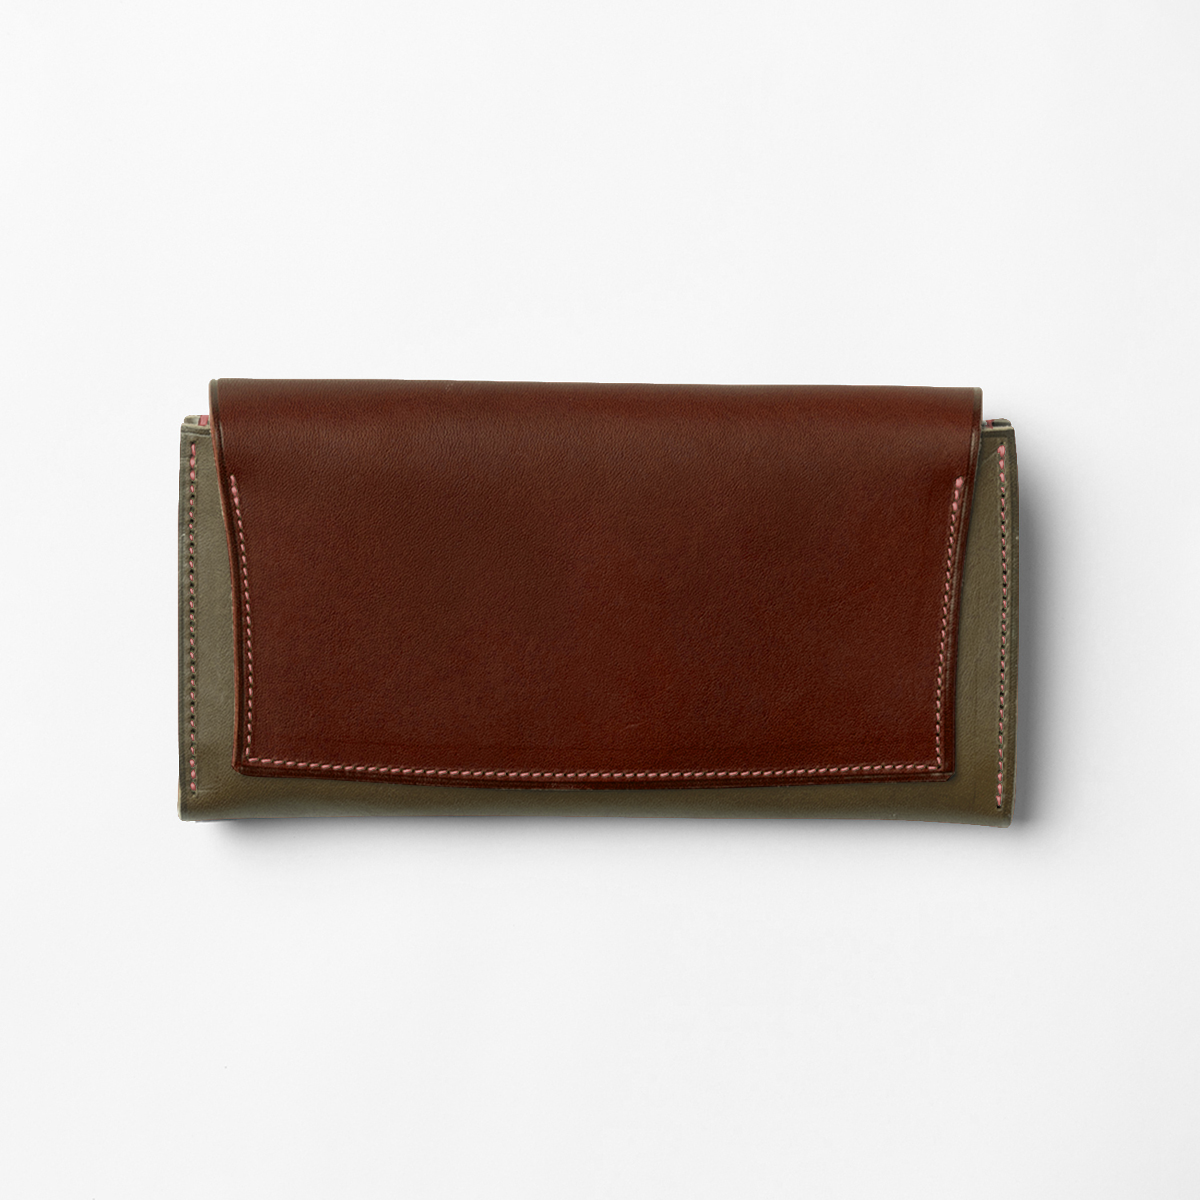 <M ripple> Customized long wallet